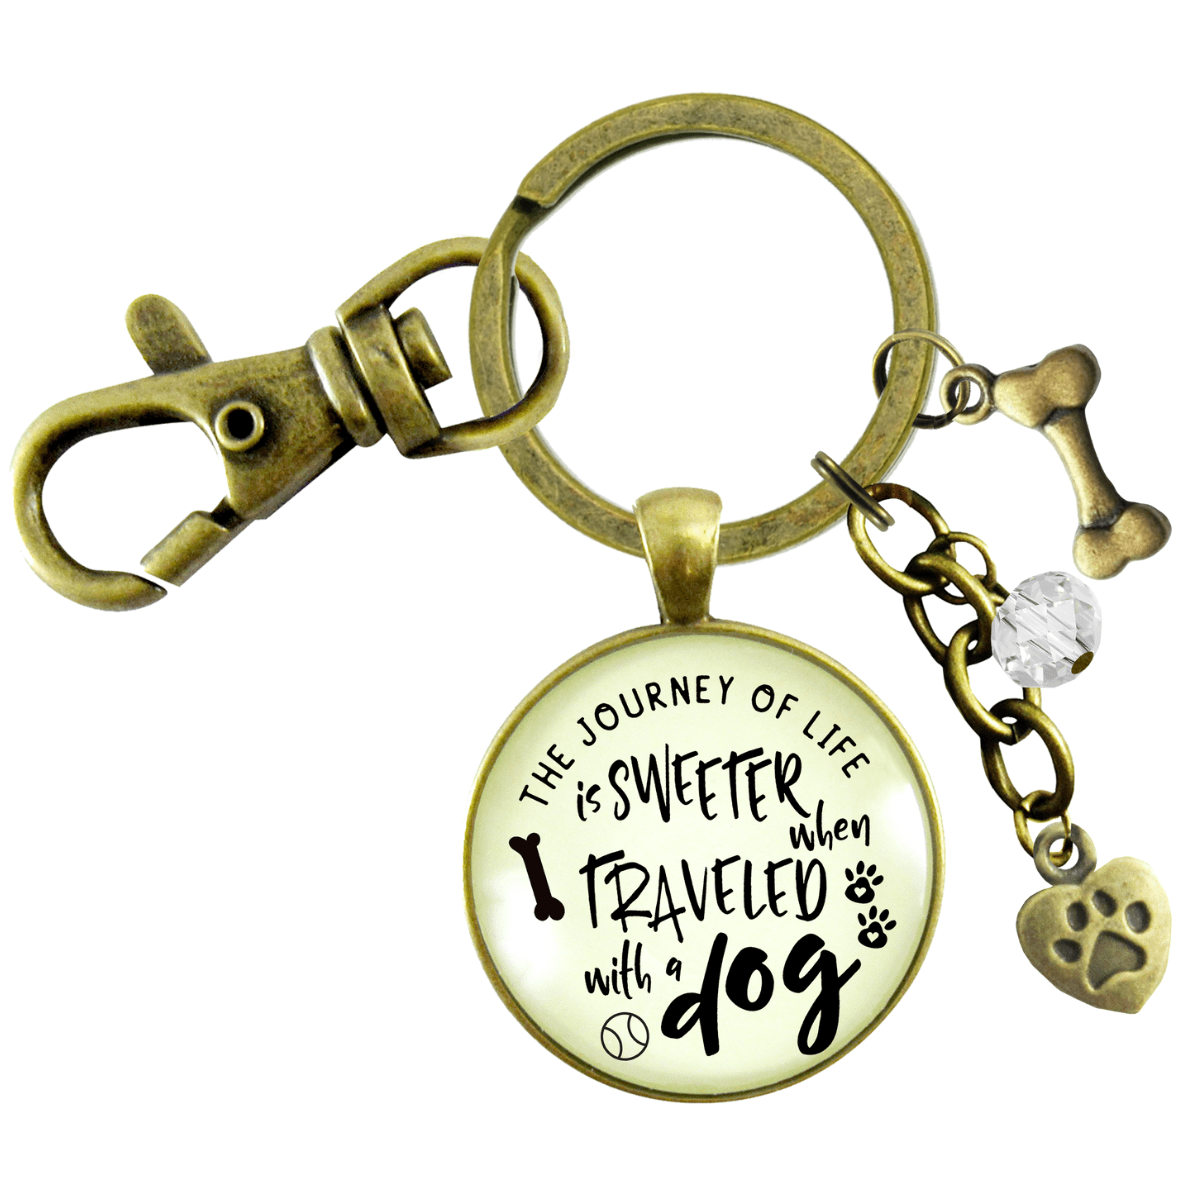 Gutsy Goodness Women's Dog Keychain